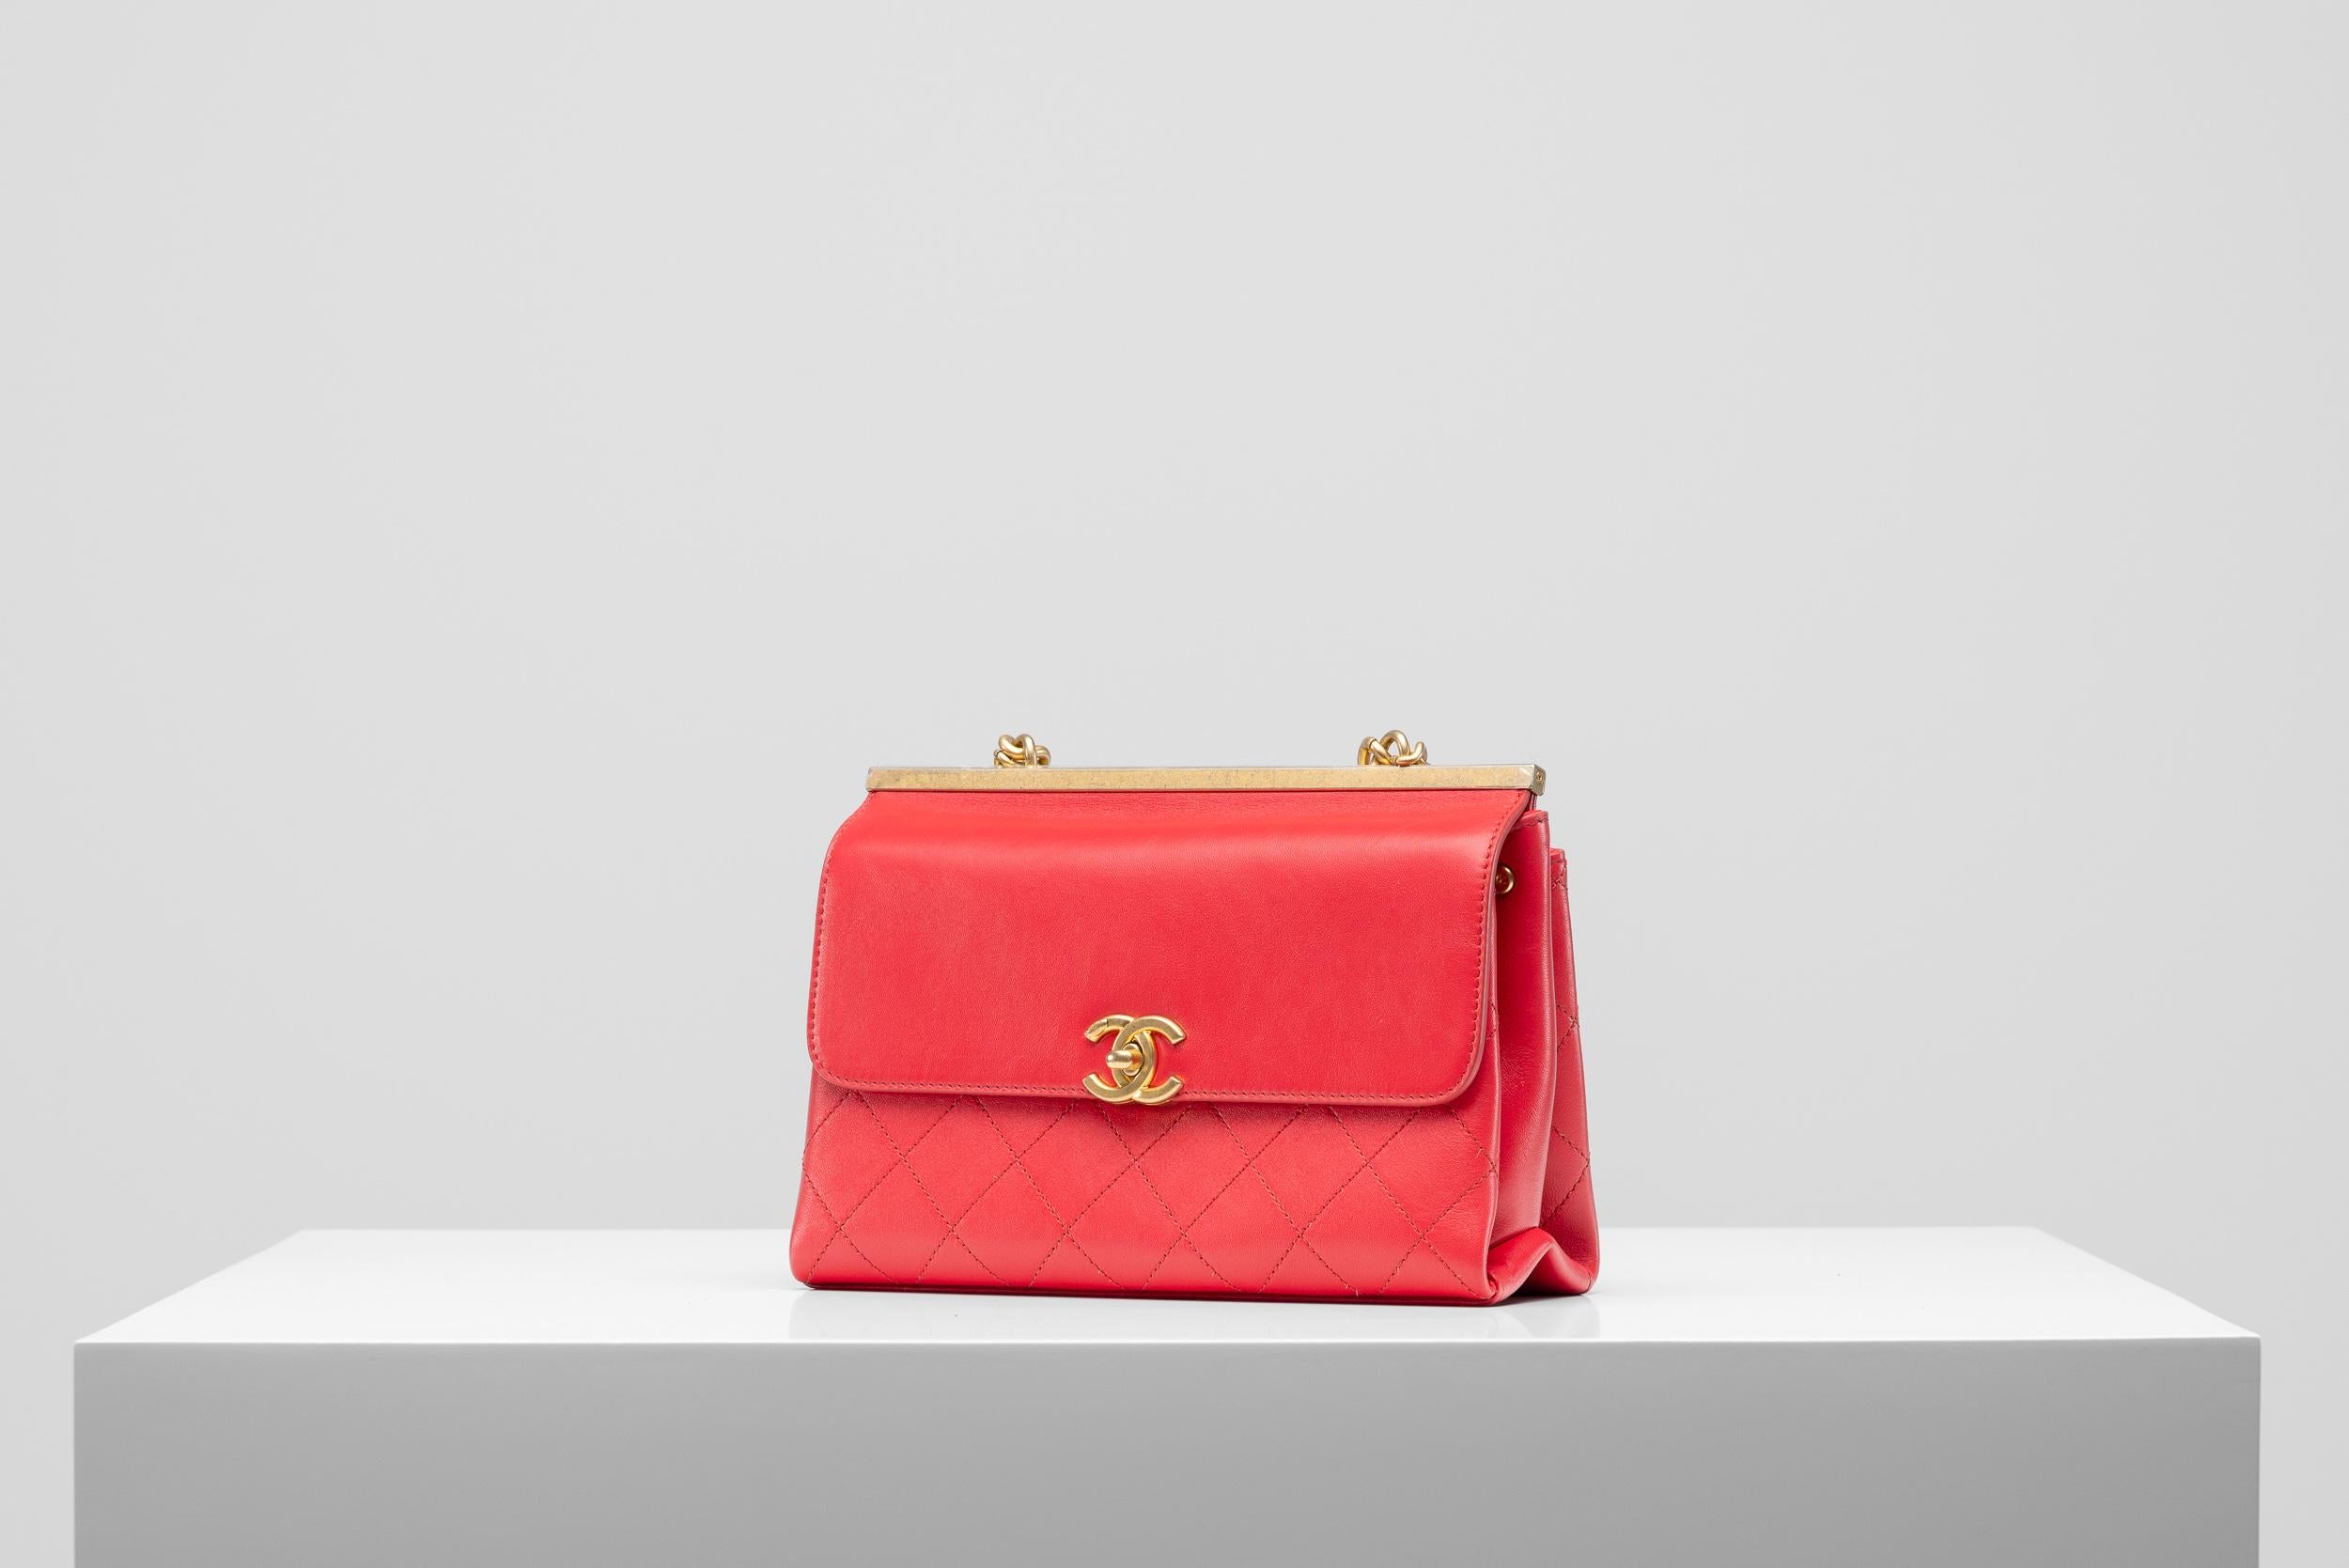 Chanel Red Flap Bag Gold-Brushed Hardware Rare 1